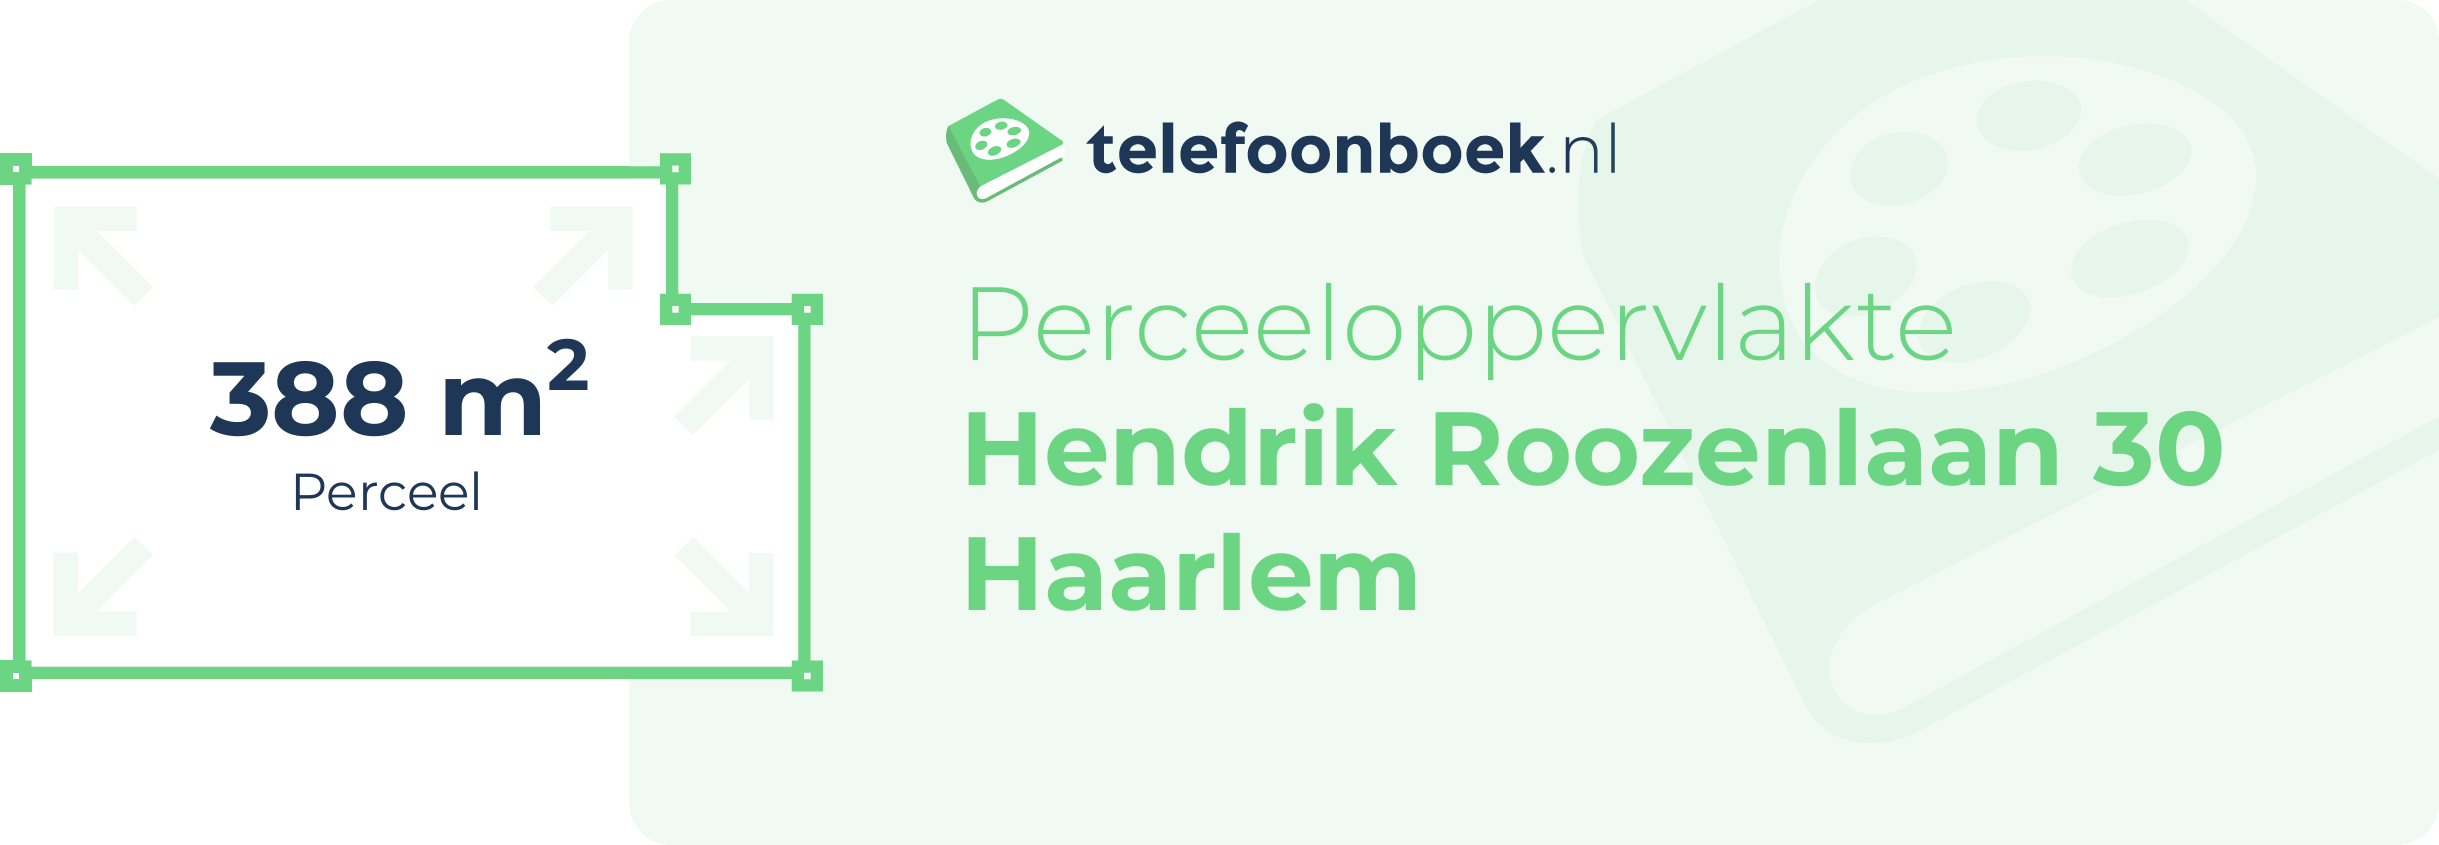 Perceeloppervlakte Hendrik Roozenlaan 30 Haarlem